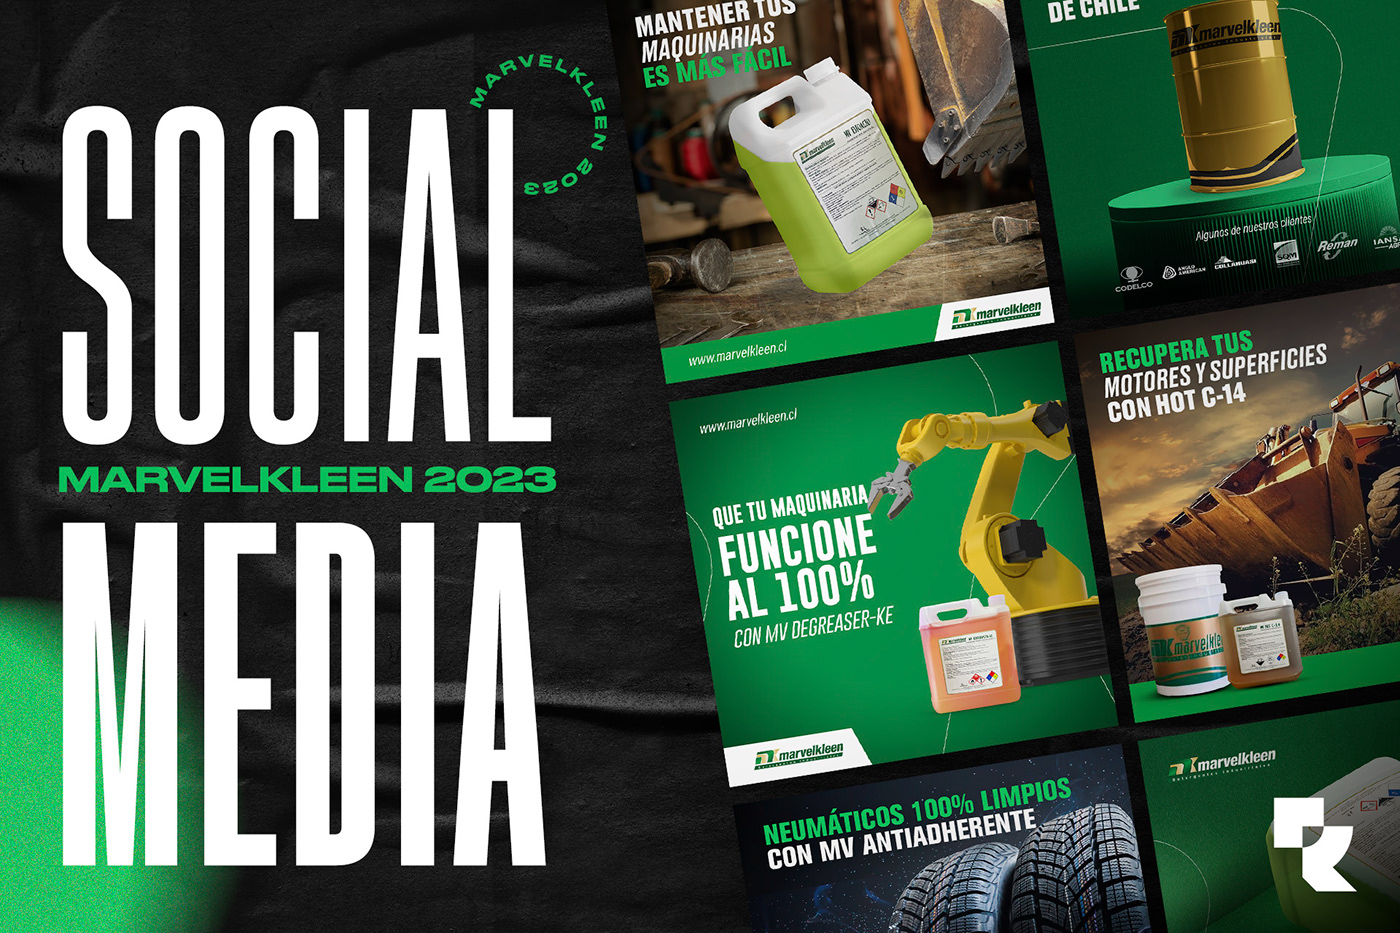 ads Advertising  aseo clean limpieza marketing   redes sociales social media Social media post Socialmedia